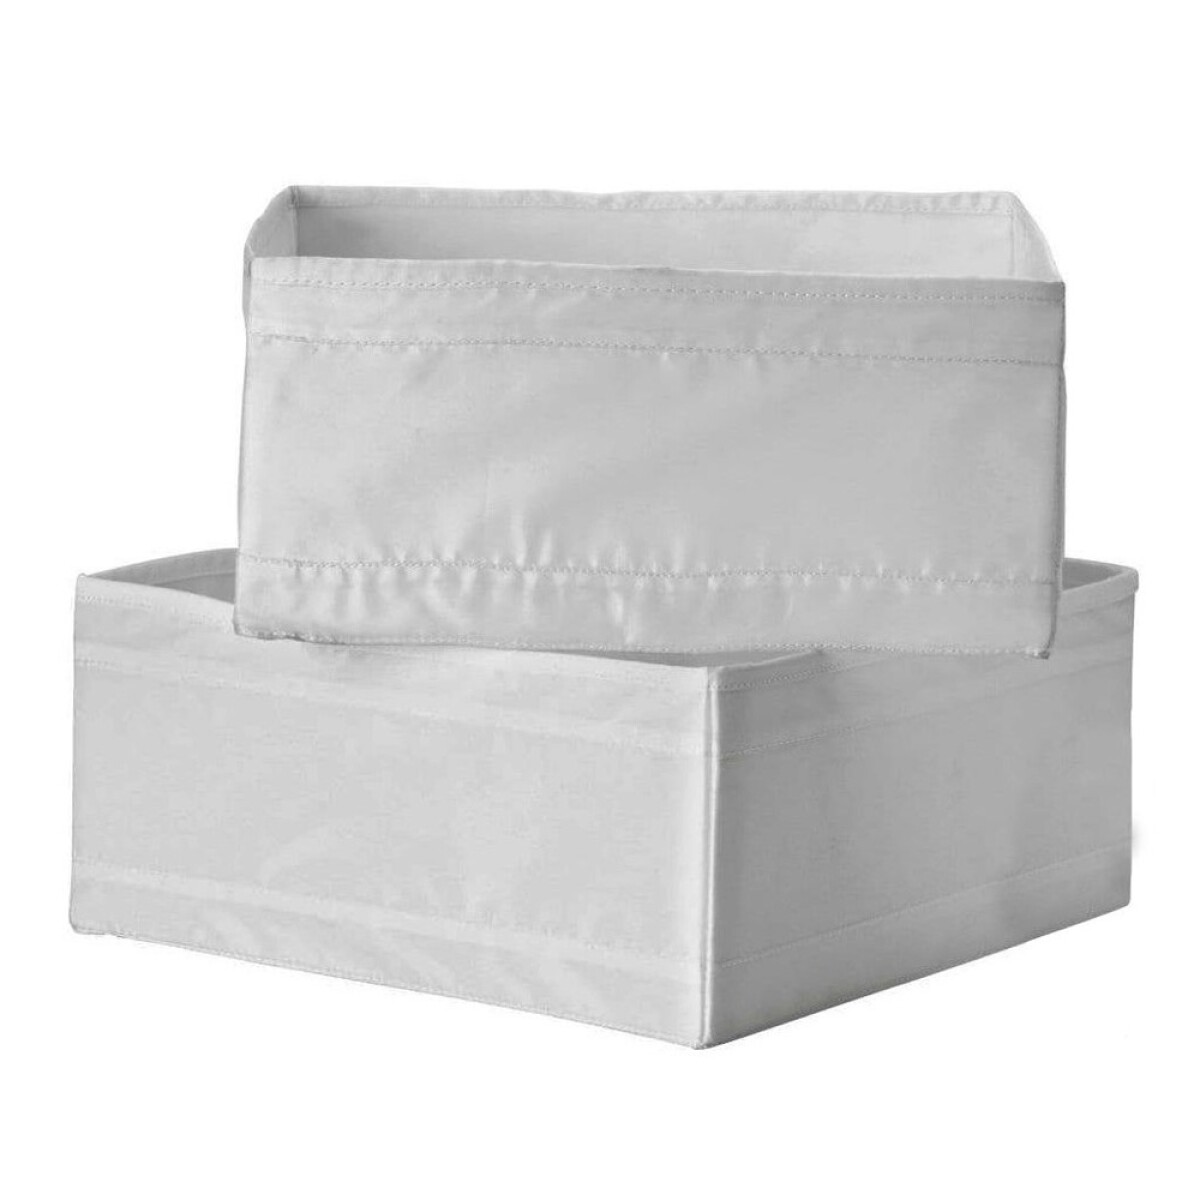 Set 2 Cajas Organizadoras 28x28x13cm Plegables Impermeables - Blanco 